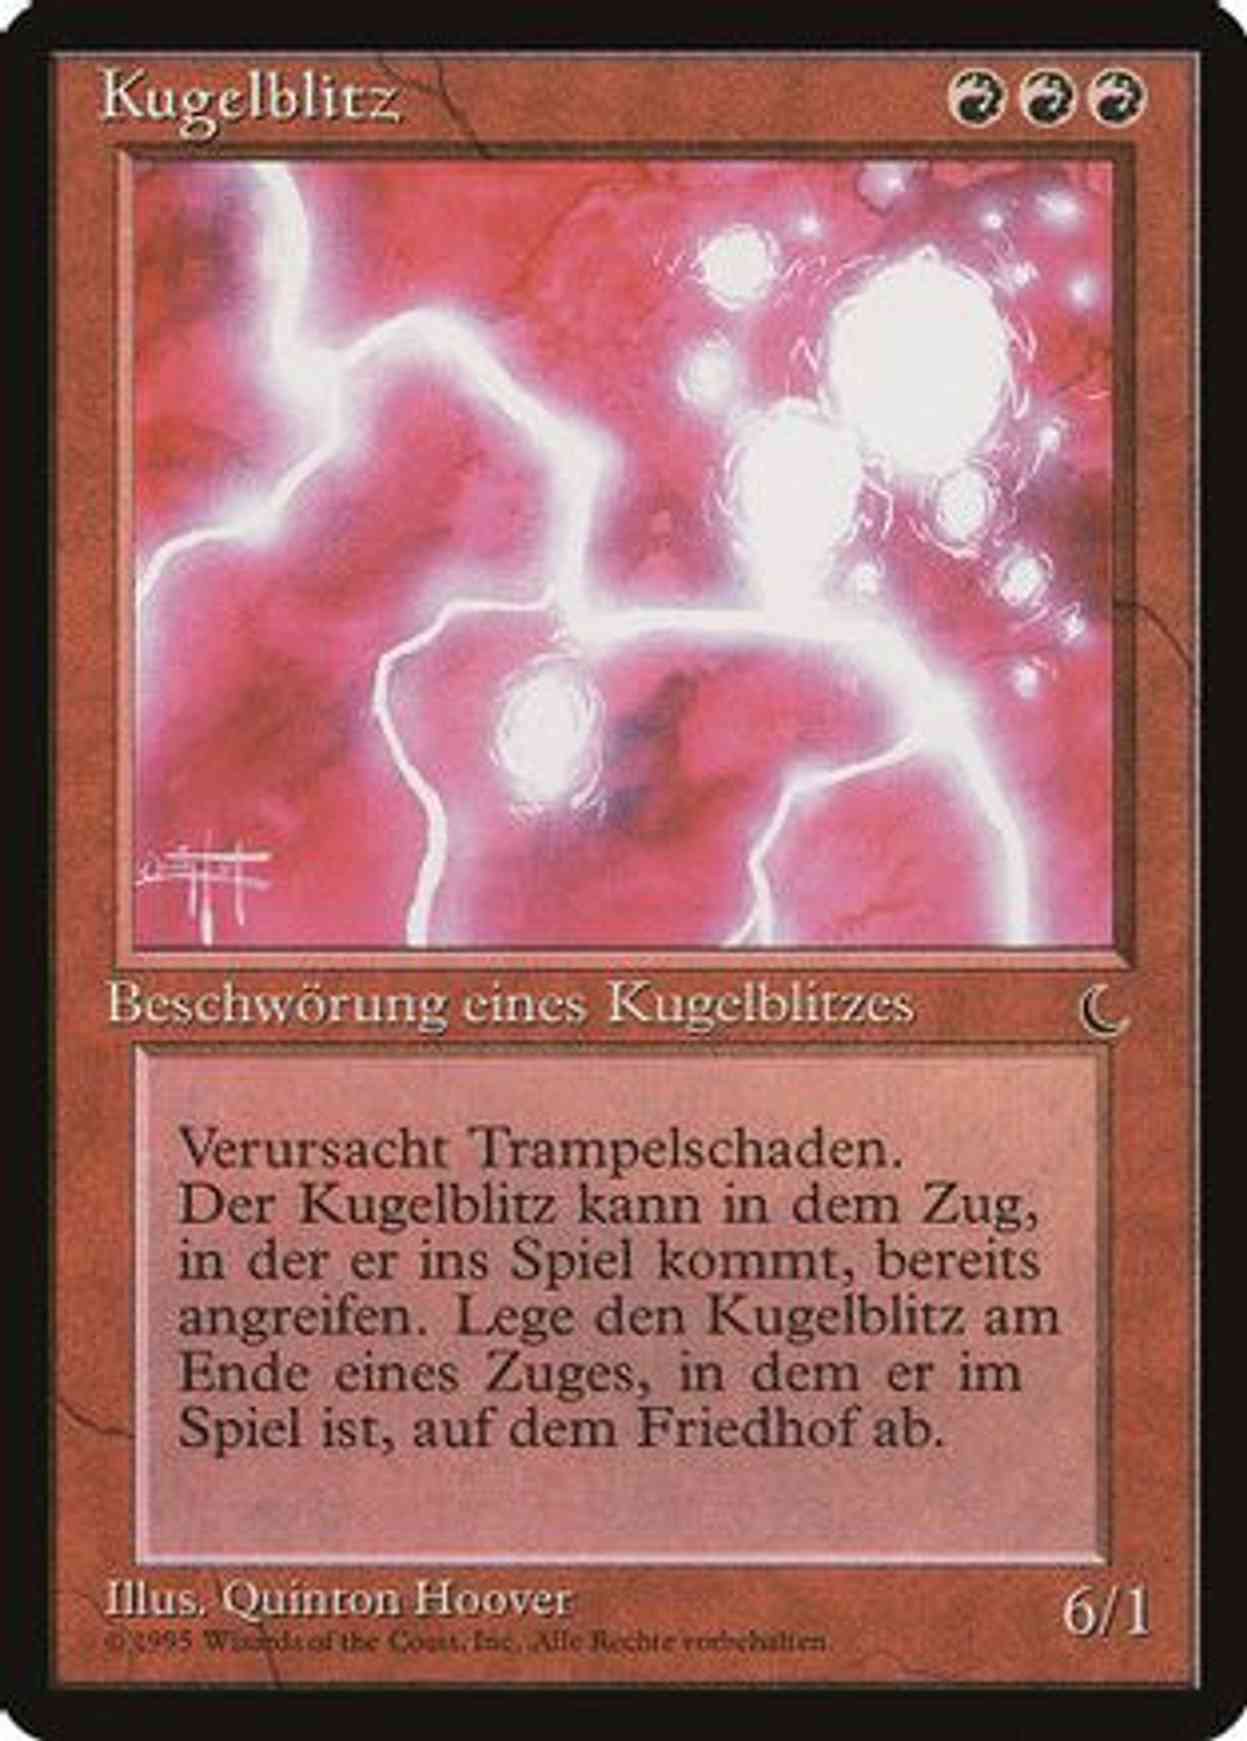 Ball Lightning (German) - "Kugelblitz" magic card front